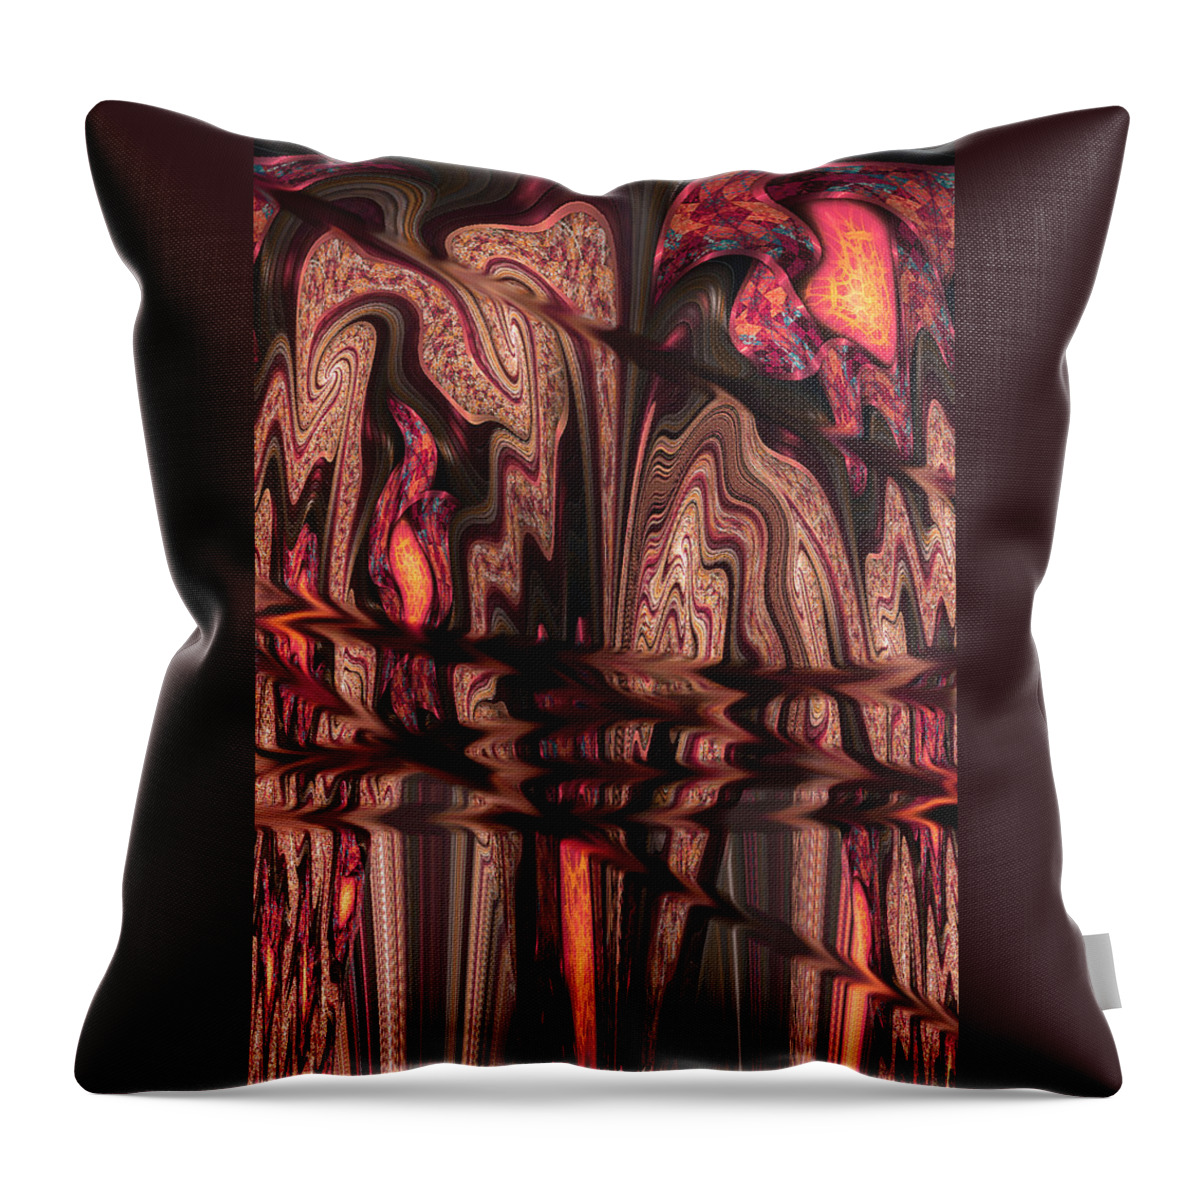 Fractal Throw Pillow featuring the digital art Geodes by Digital Art Cafe